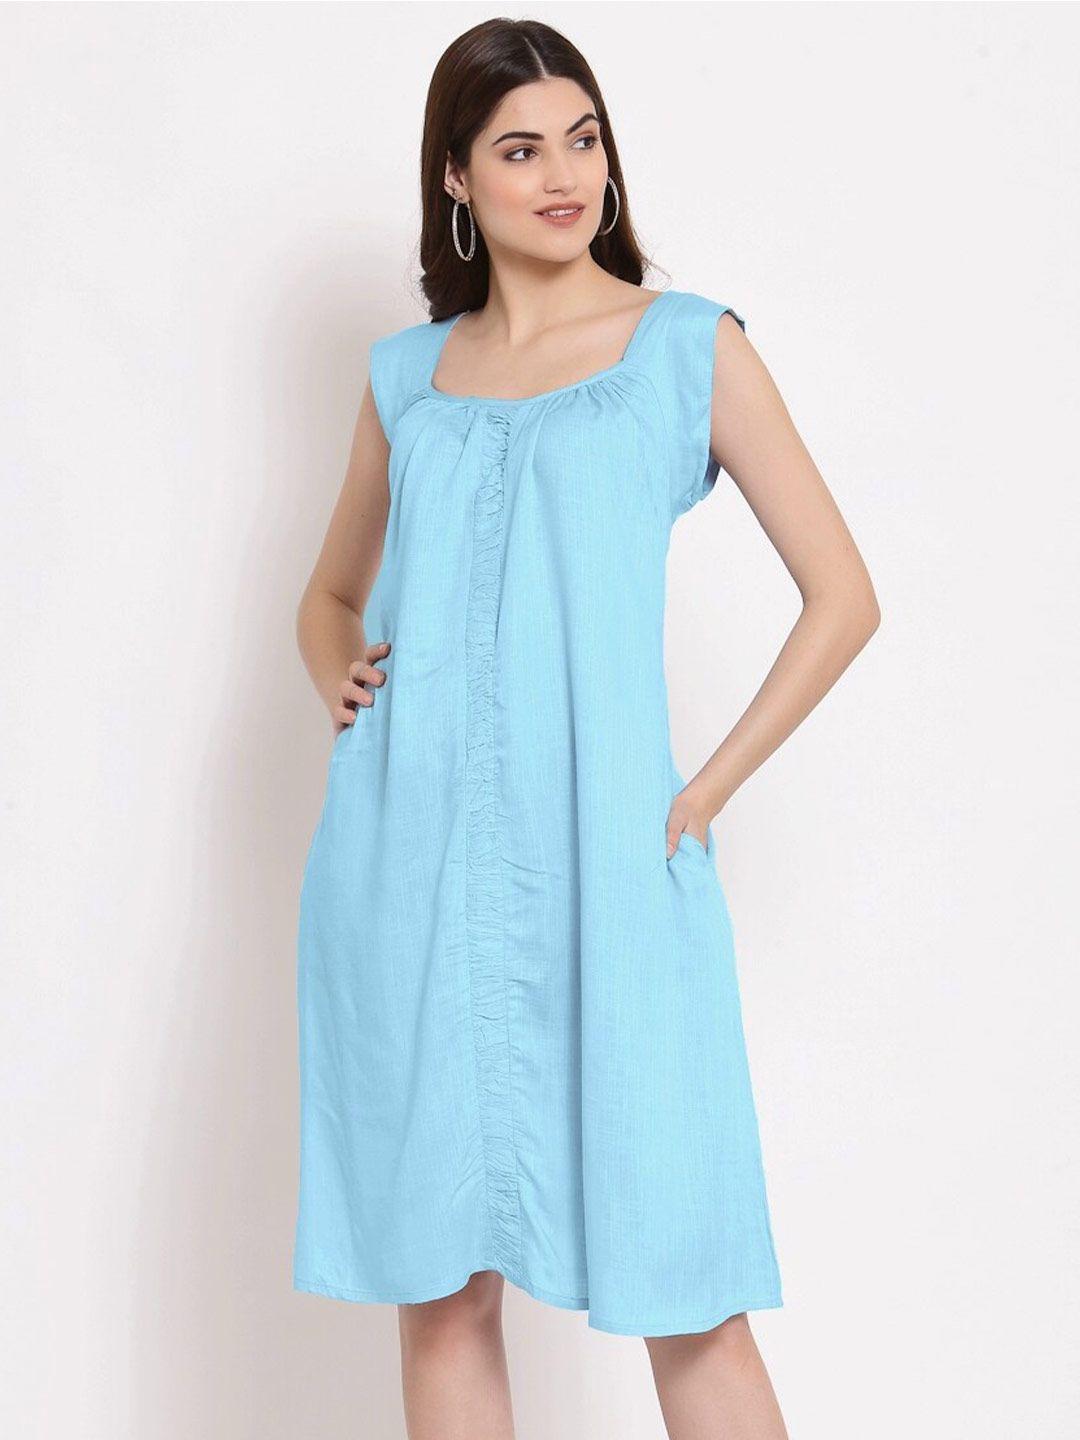 patrorna-cotton-sleeveless-a-line-dress